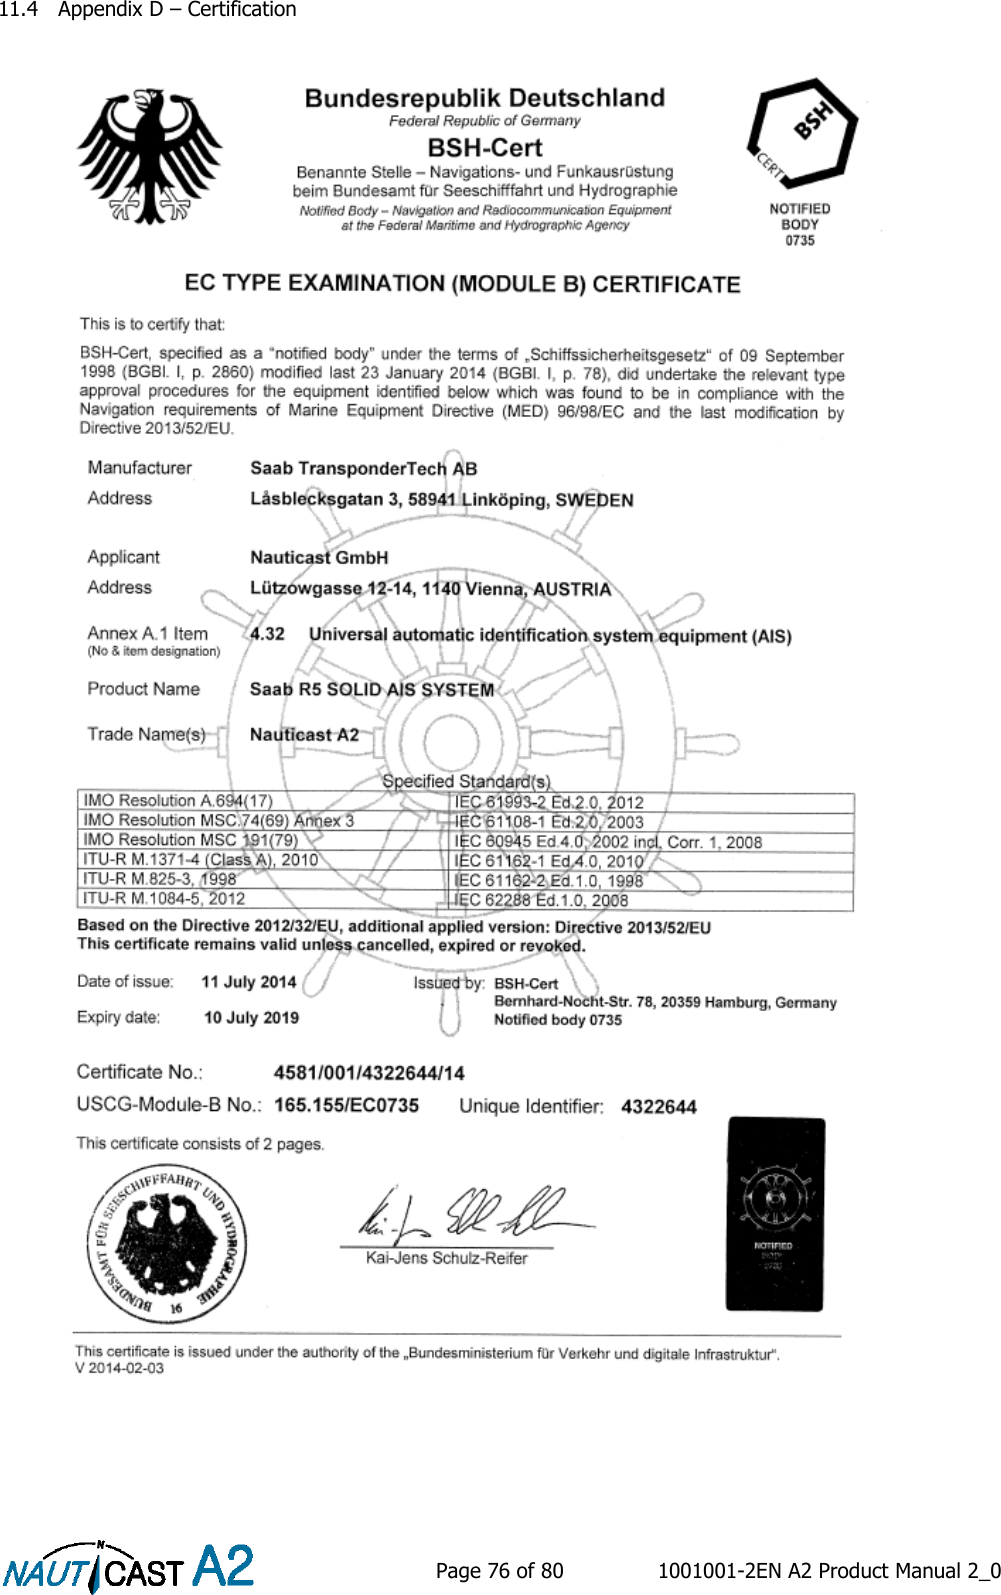    Page 76 of 80  1001001-2EN A2 Product Manual 2_0   11.4 Appendix D – Certification      